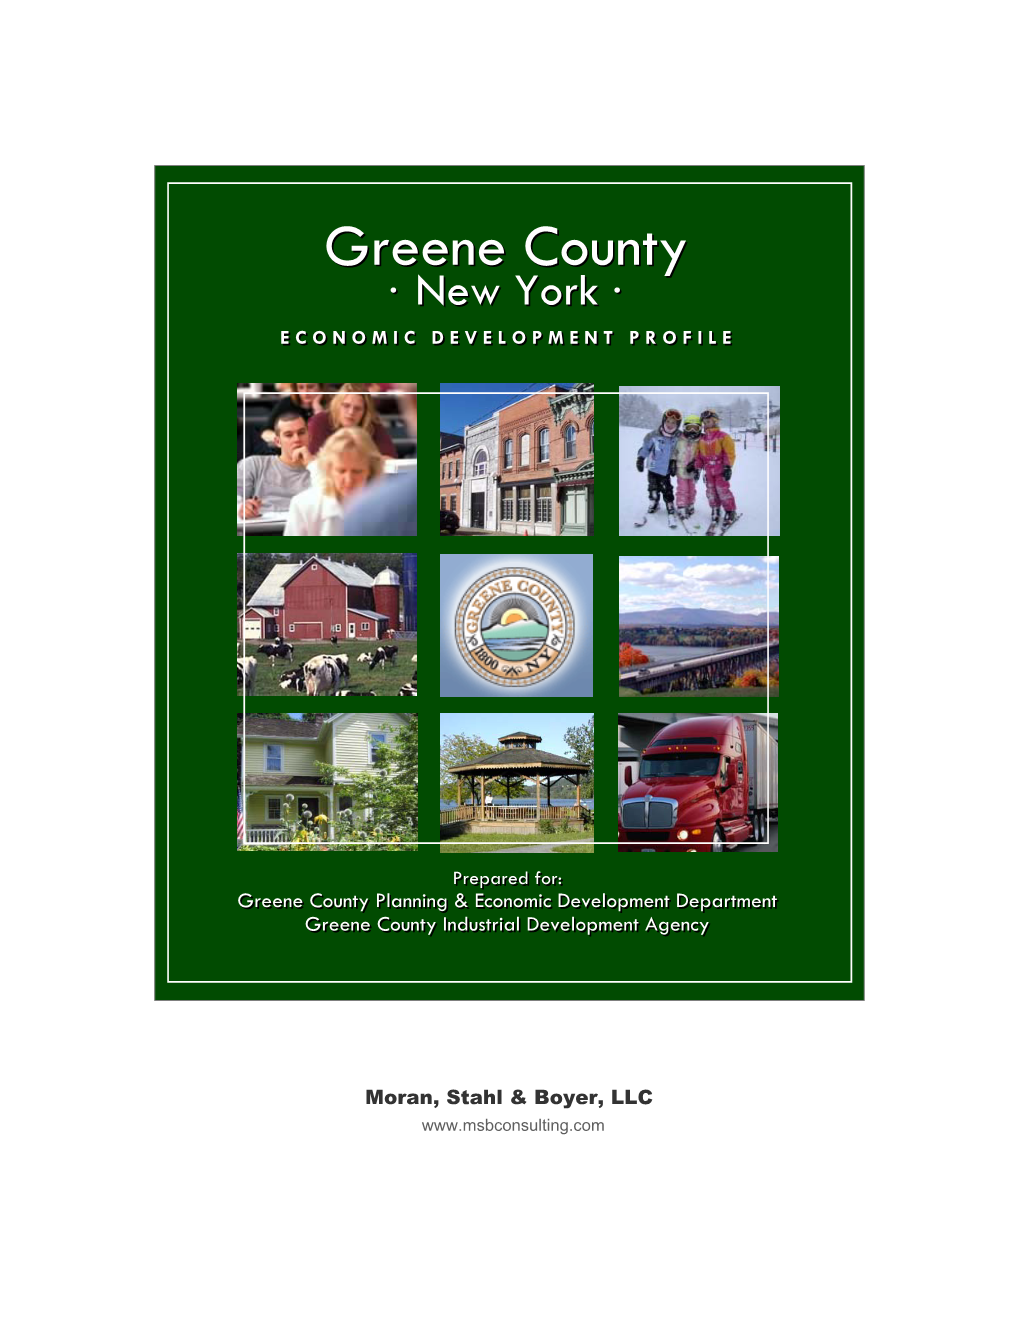 Greene County New York